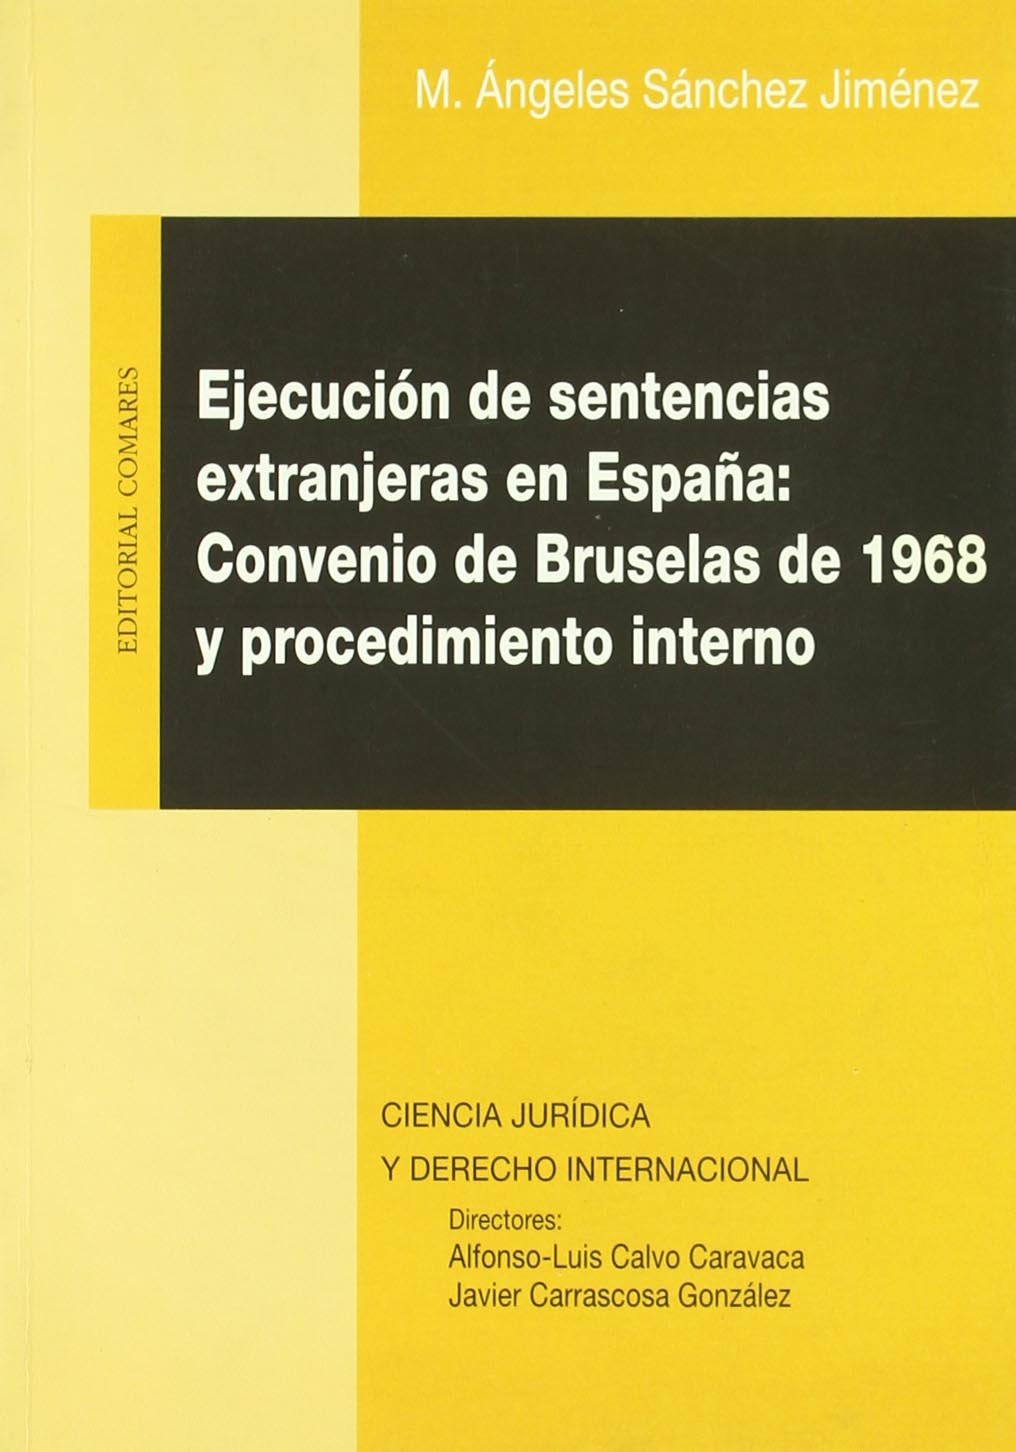 Ejecución de sentencias extranjeras en España